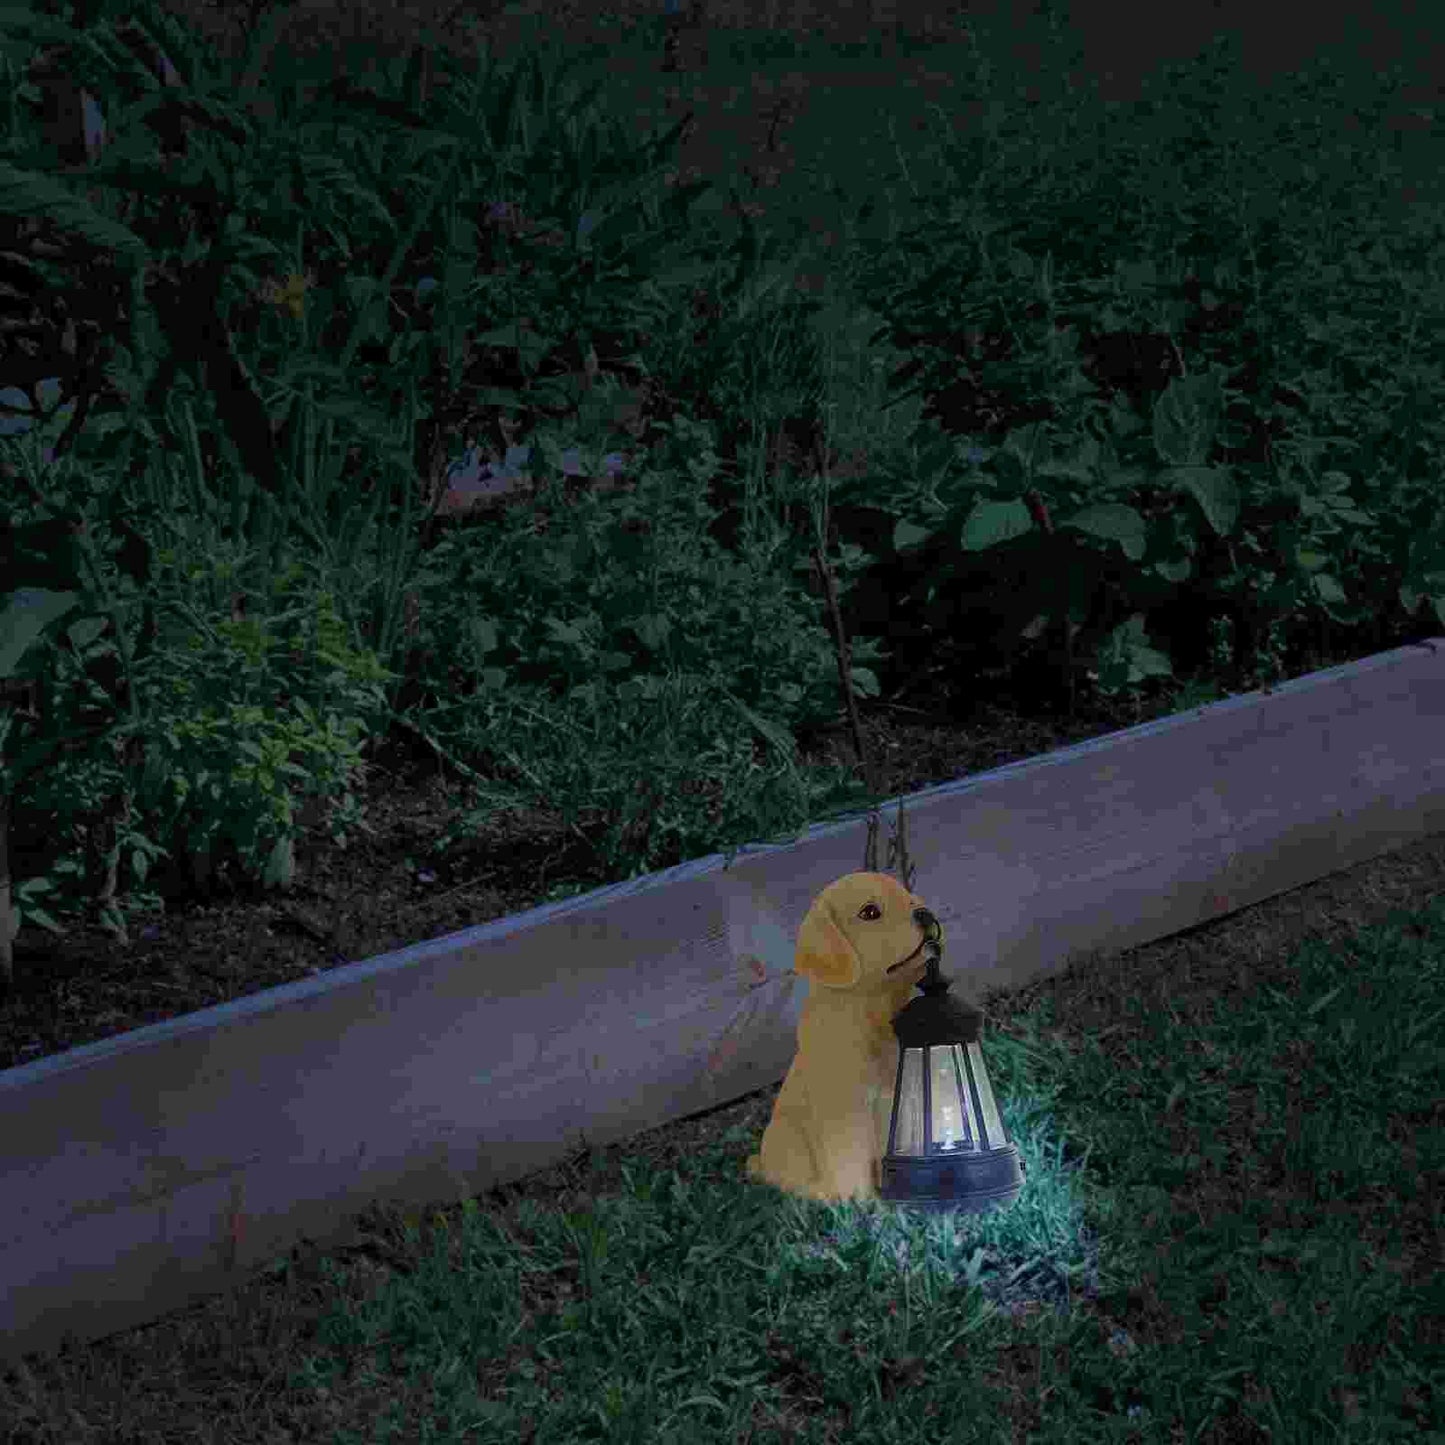 Solar Statue Dog Lantern Lights Decor Patio Retro Light Outdoor Table Lamp Decorative Garden Powered Lamps Pathway Up Dog Led